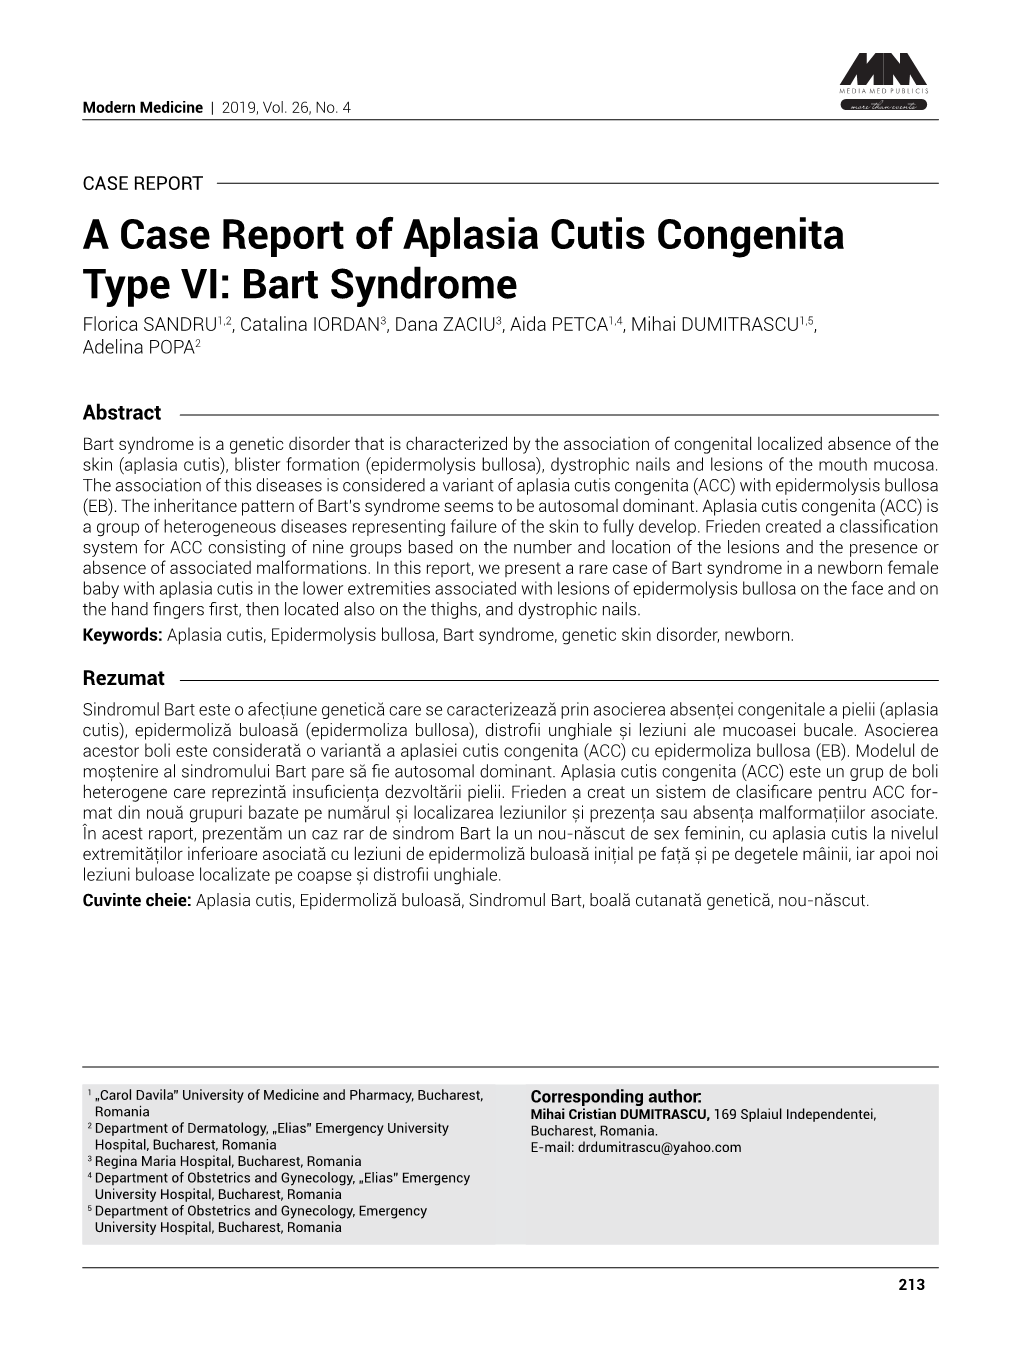 A Case Report of Aplasia Cutis Congenita Type VI: Bart Syndrome Florica SANDRU1,2, Catalina IORDAN3, Dana ZACIU3, Aida PETCA1,4, Mihai DUMITRASCU1,5, Adelina POPA2